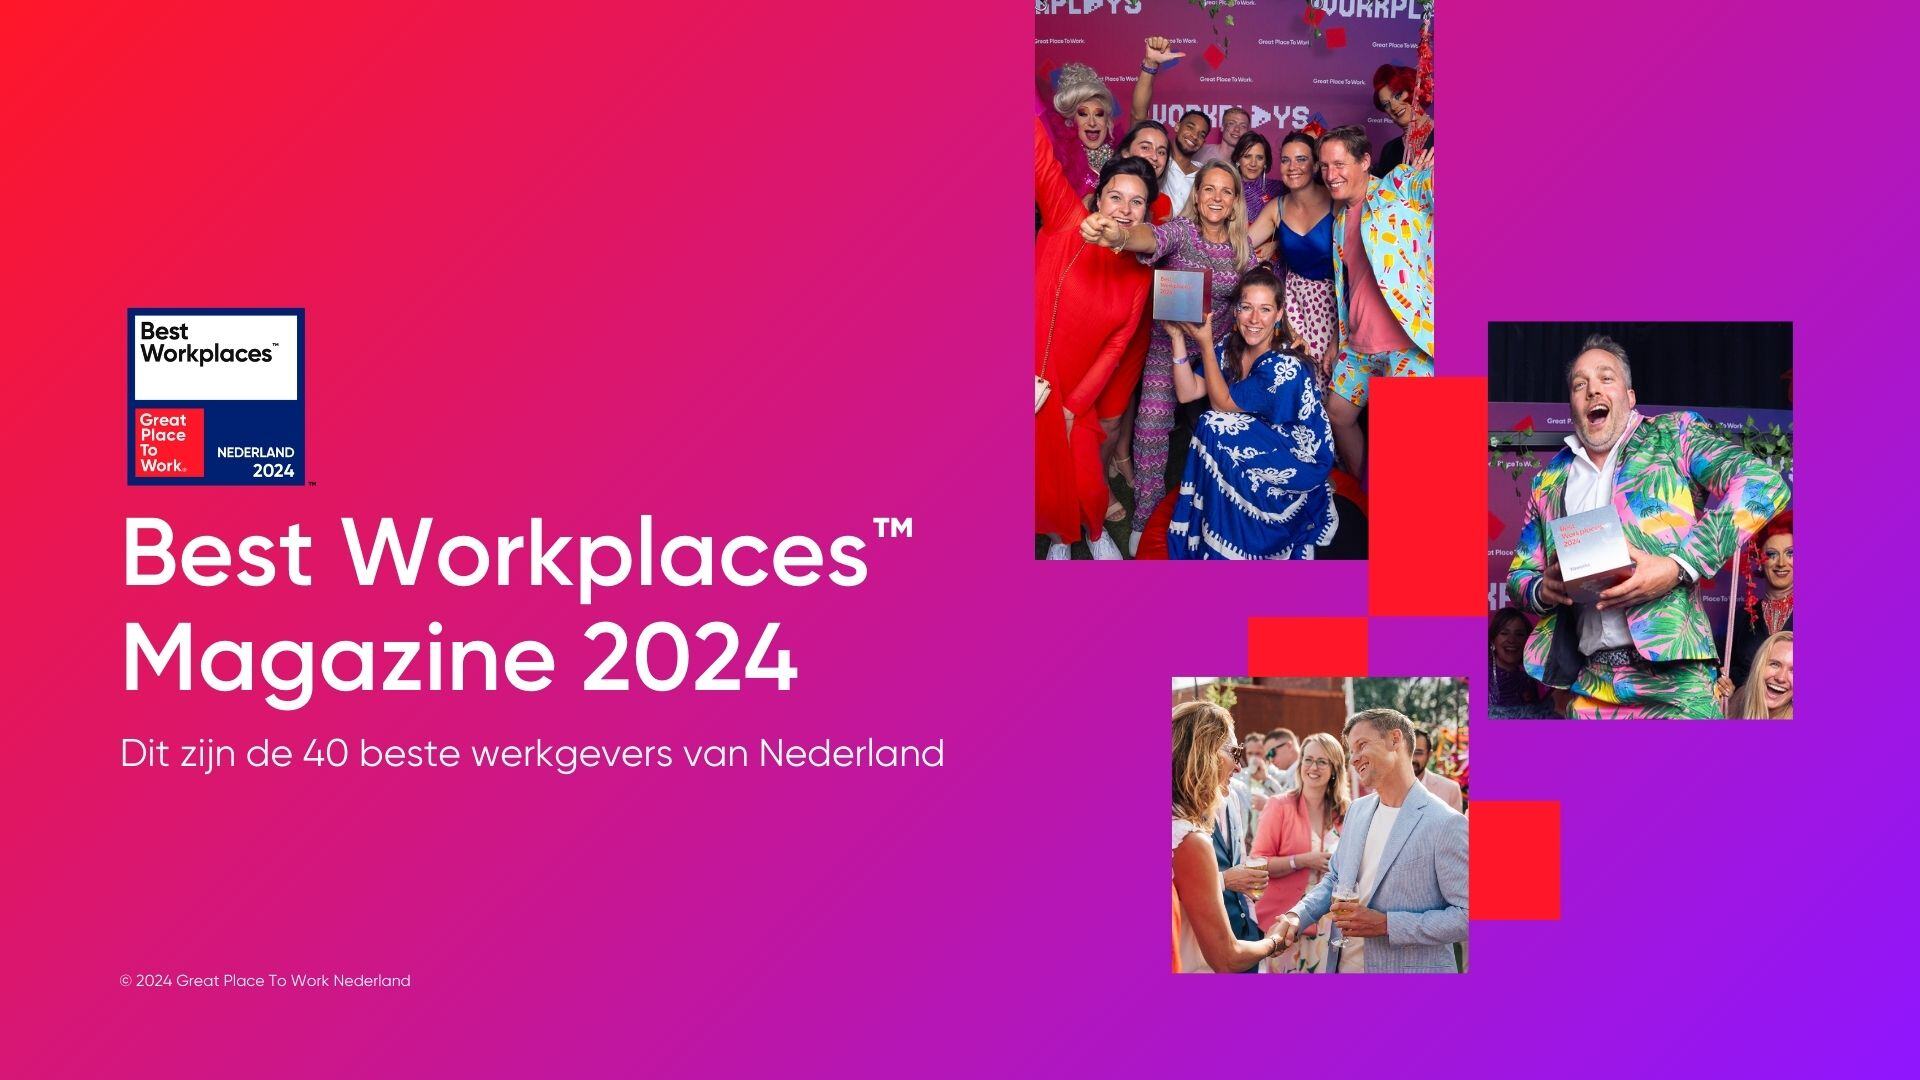 Best Workplaces Magazine 2024 [NL]